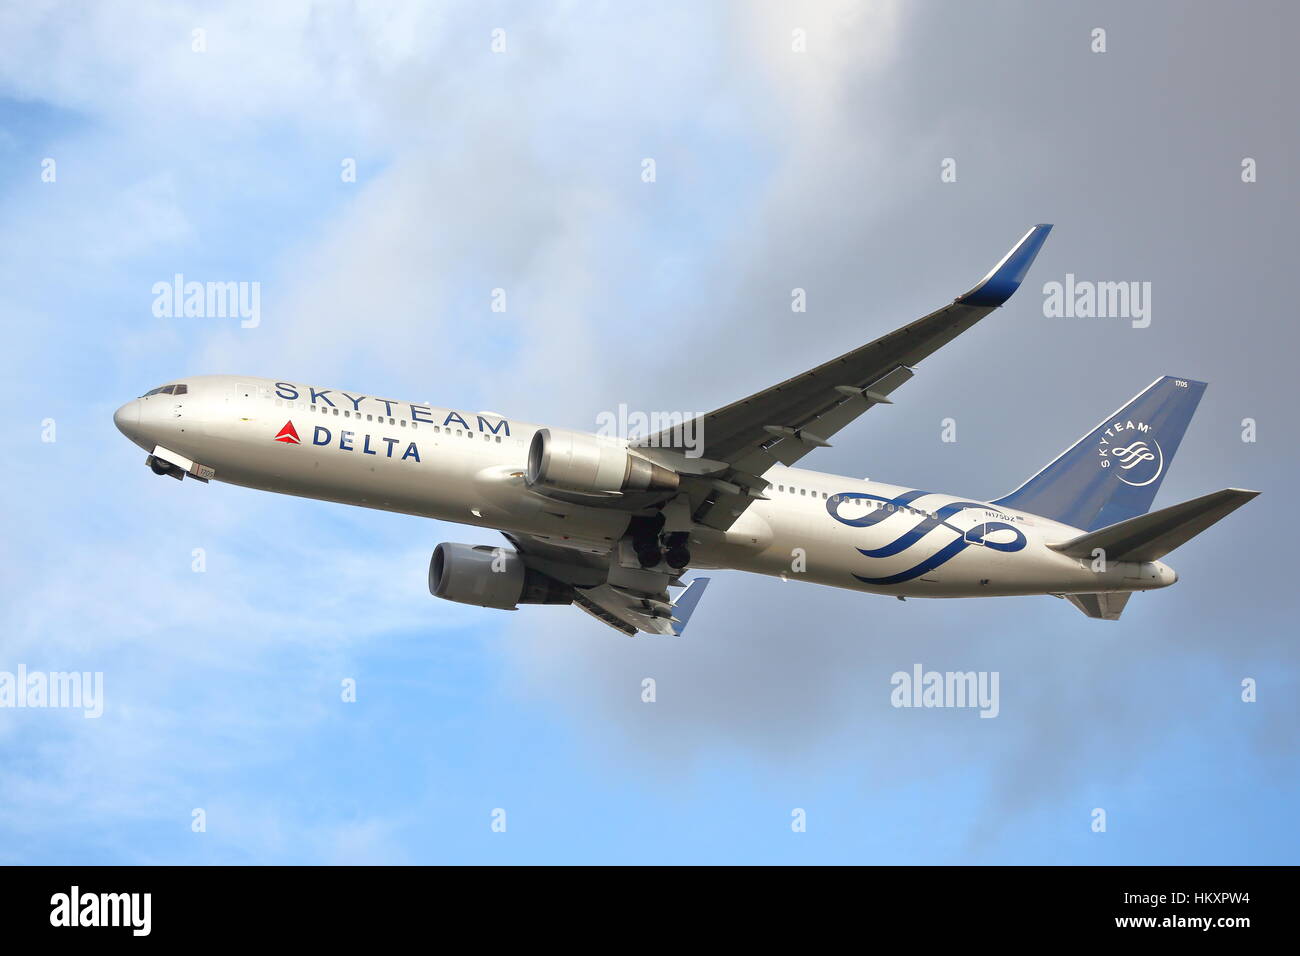 Delta Air Lines Skyteam Boeing 767-300ER N175DZ departing from London Heathrow Airport, UK Stock Photo